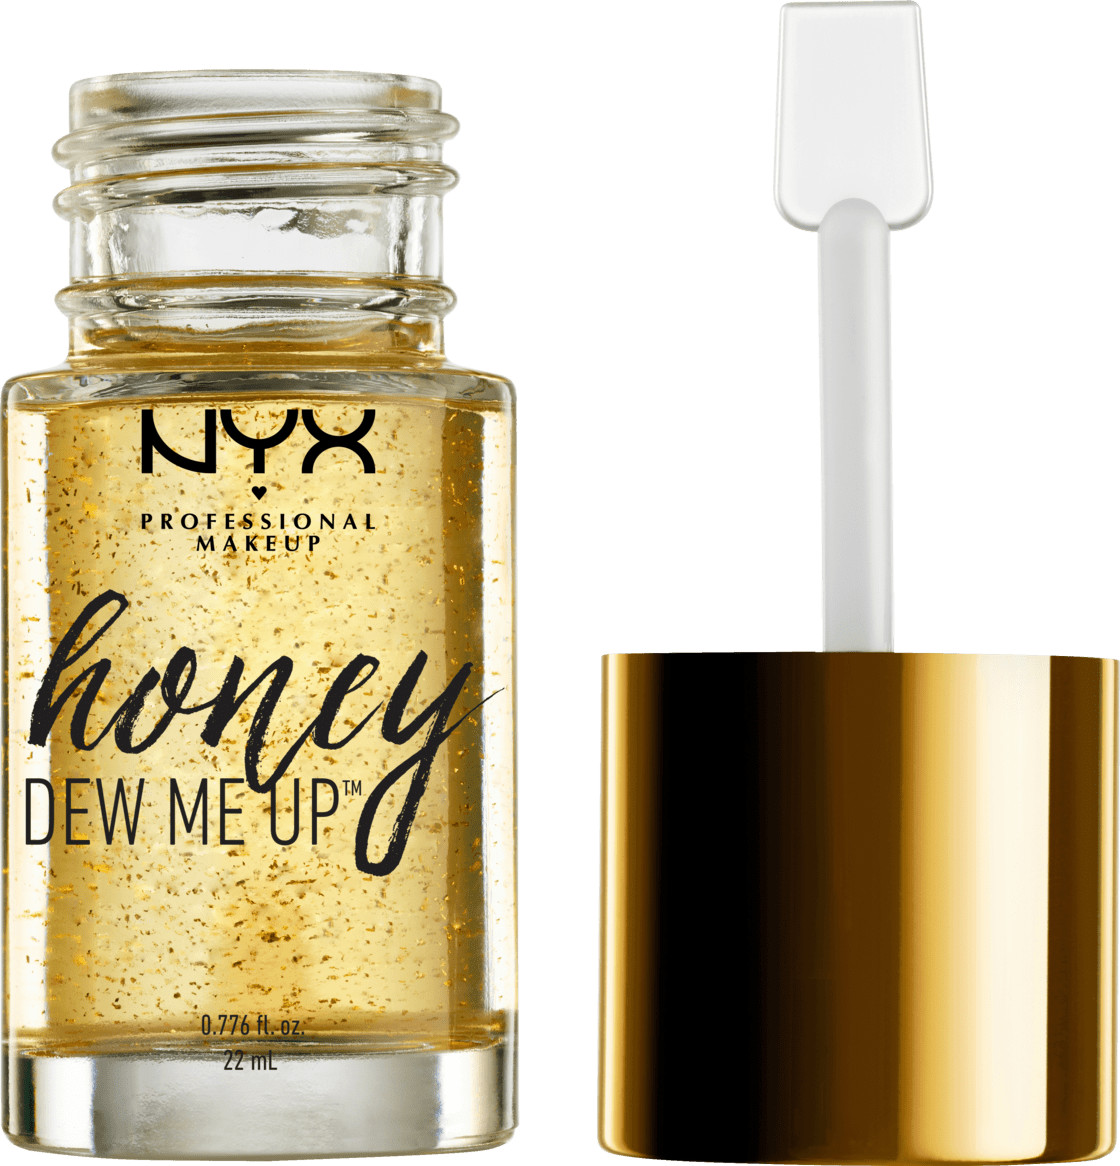 honey dew company